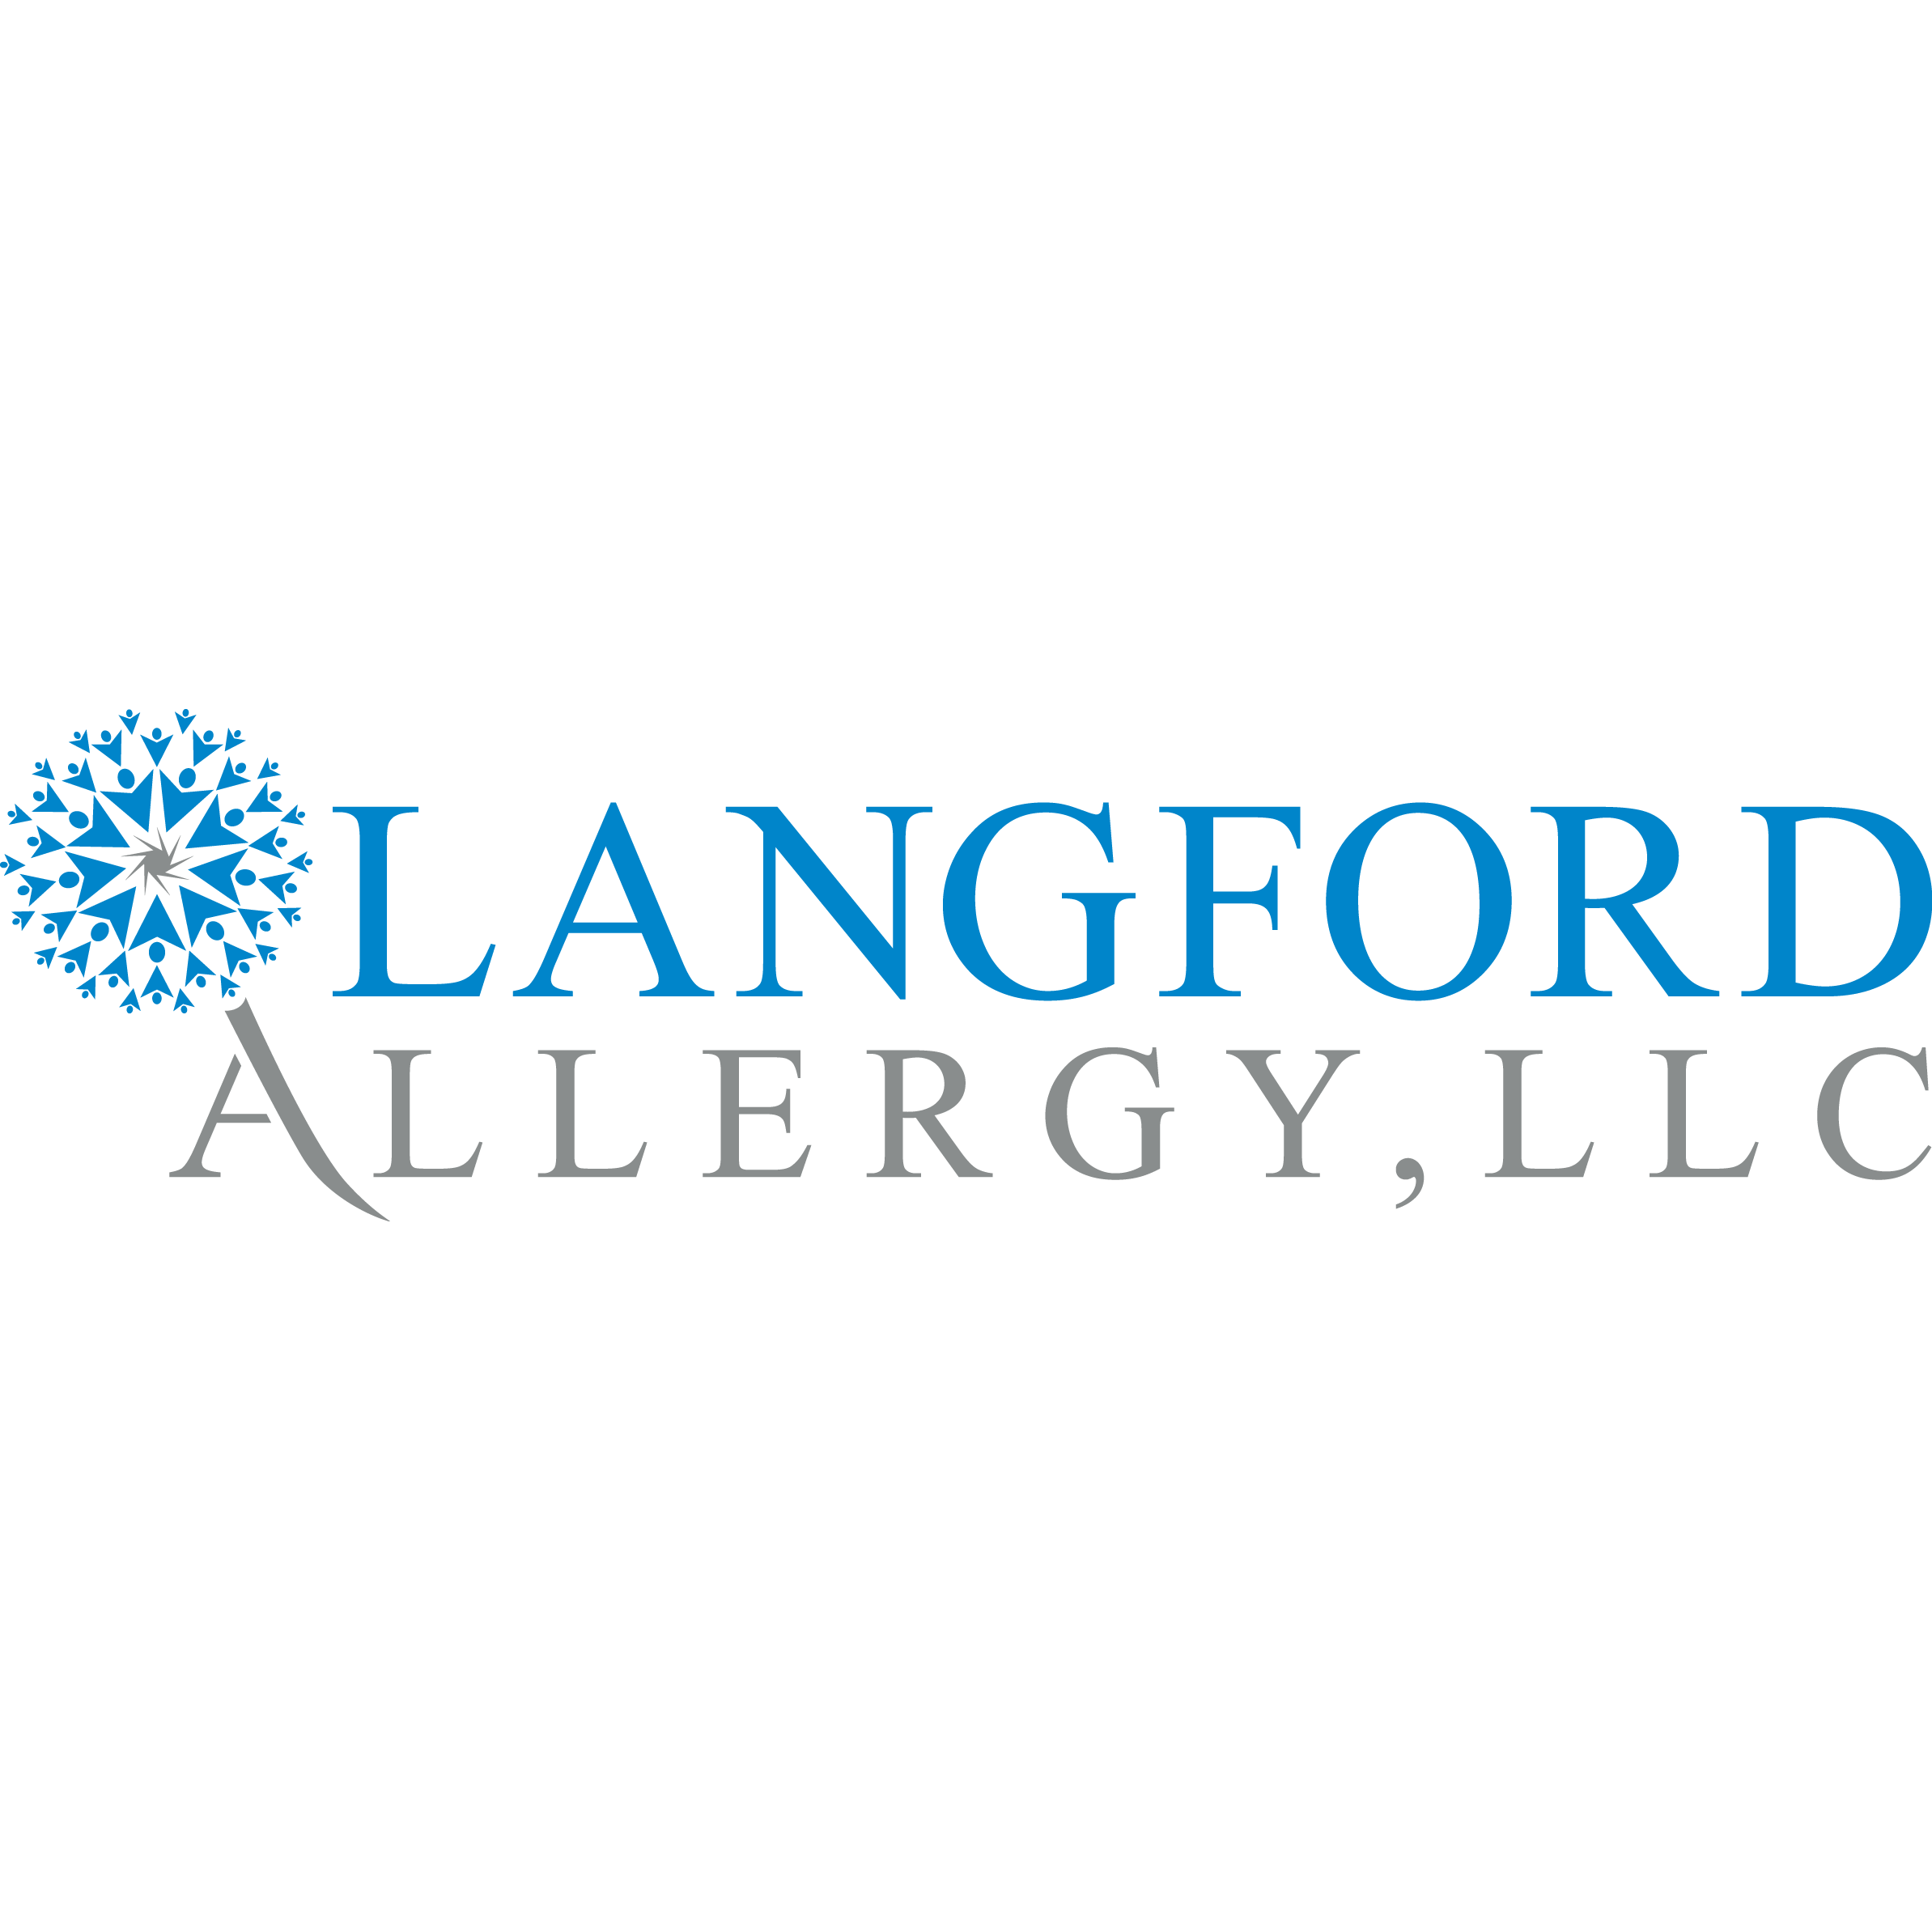 Langford Allergy, LLC - Warner Robins, GA 31088 - (478)787-4728 | ShowMeLocal.com